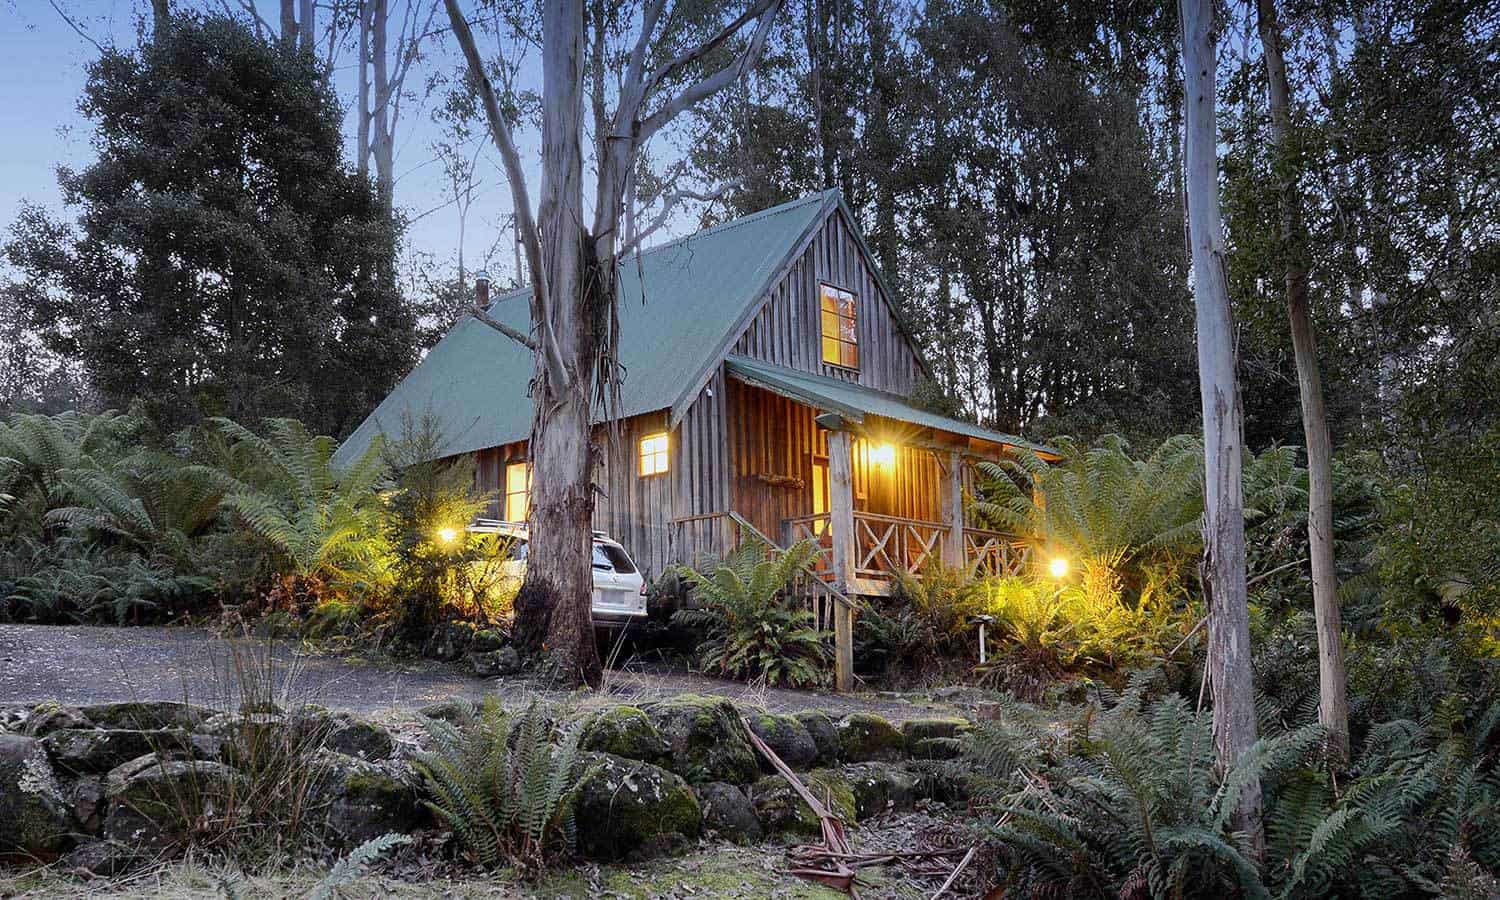 Self Contained accommodation cradle mountain tasmania